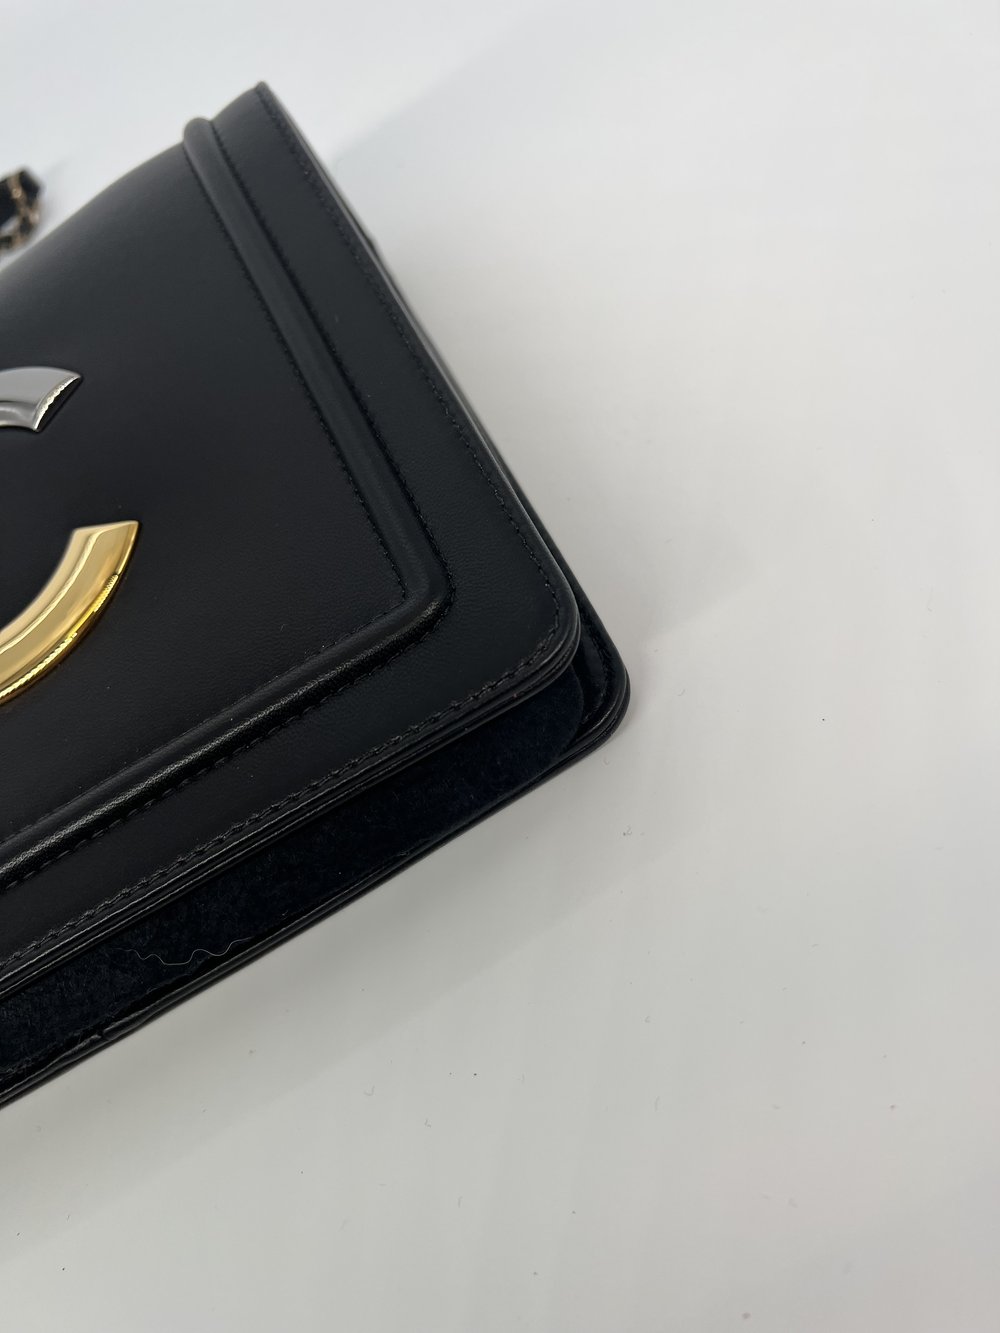 Chanel Bag Black Two Toned Flap bag - SOLD